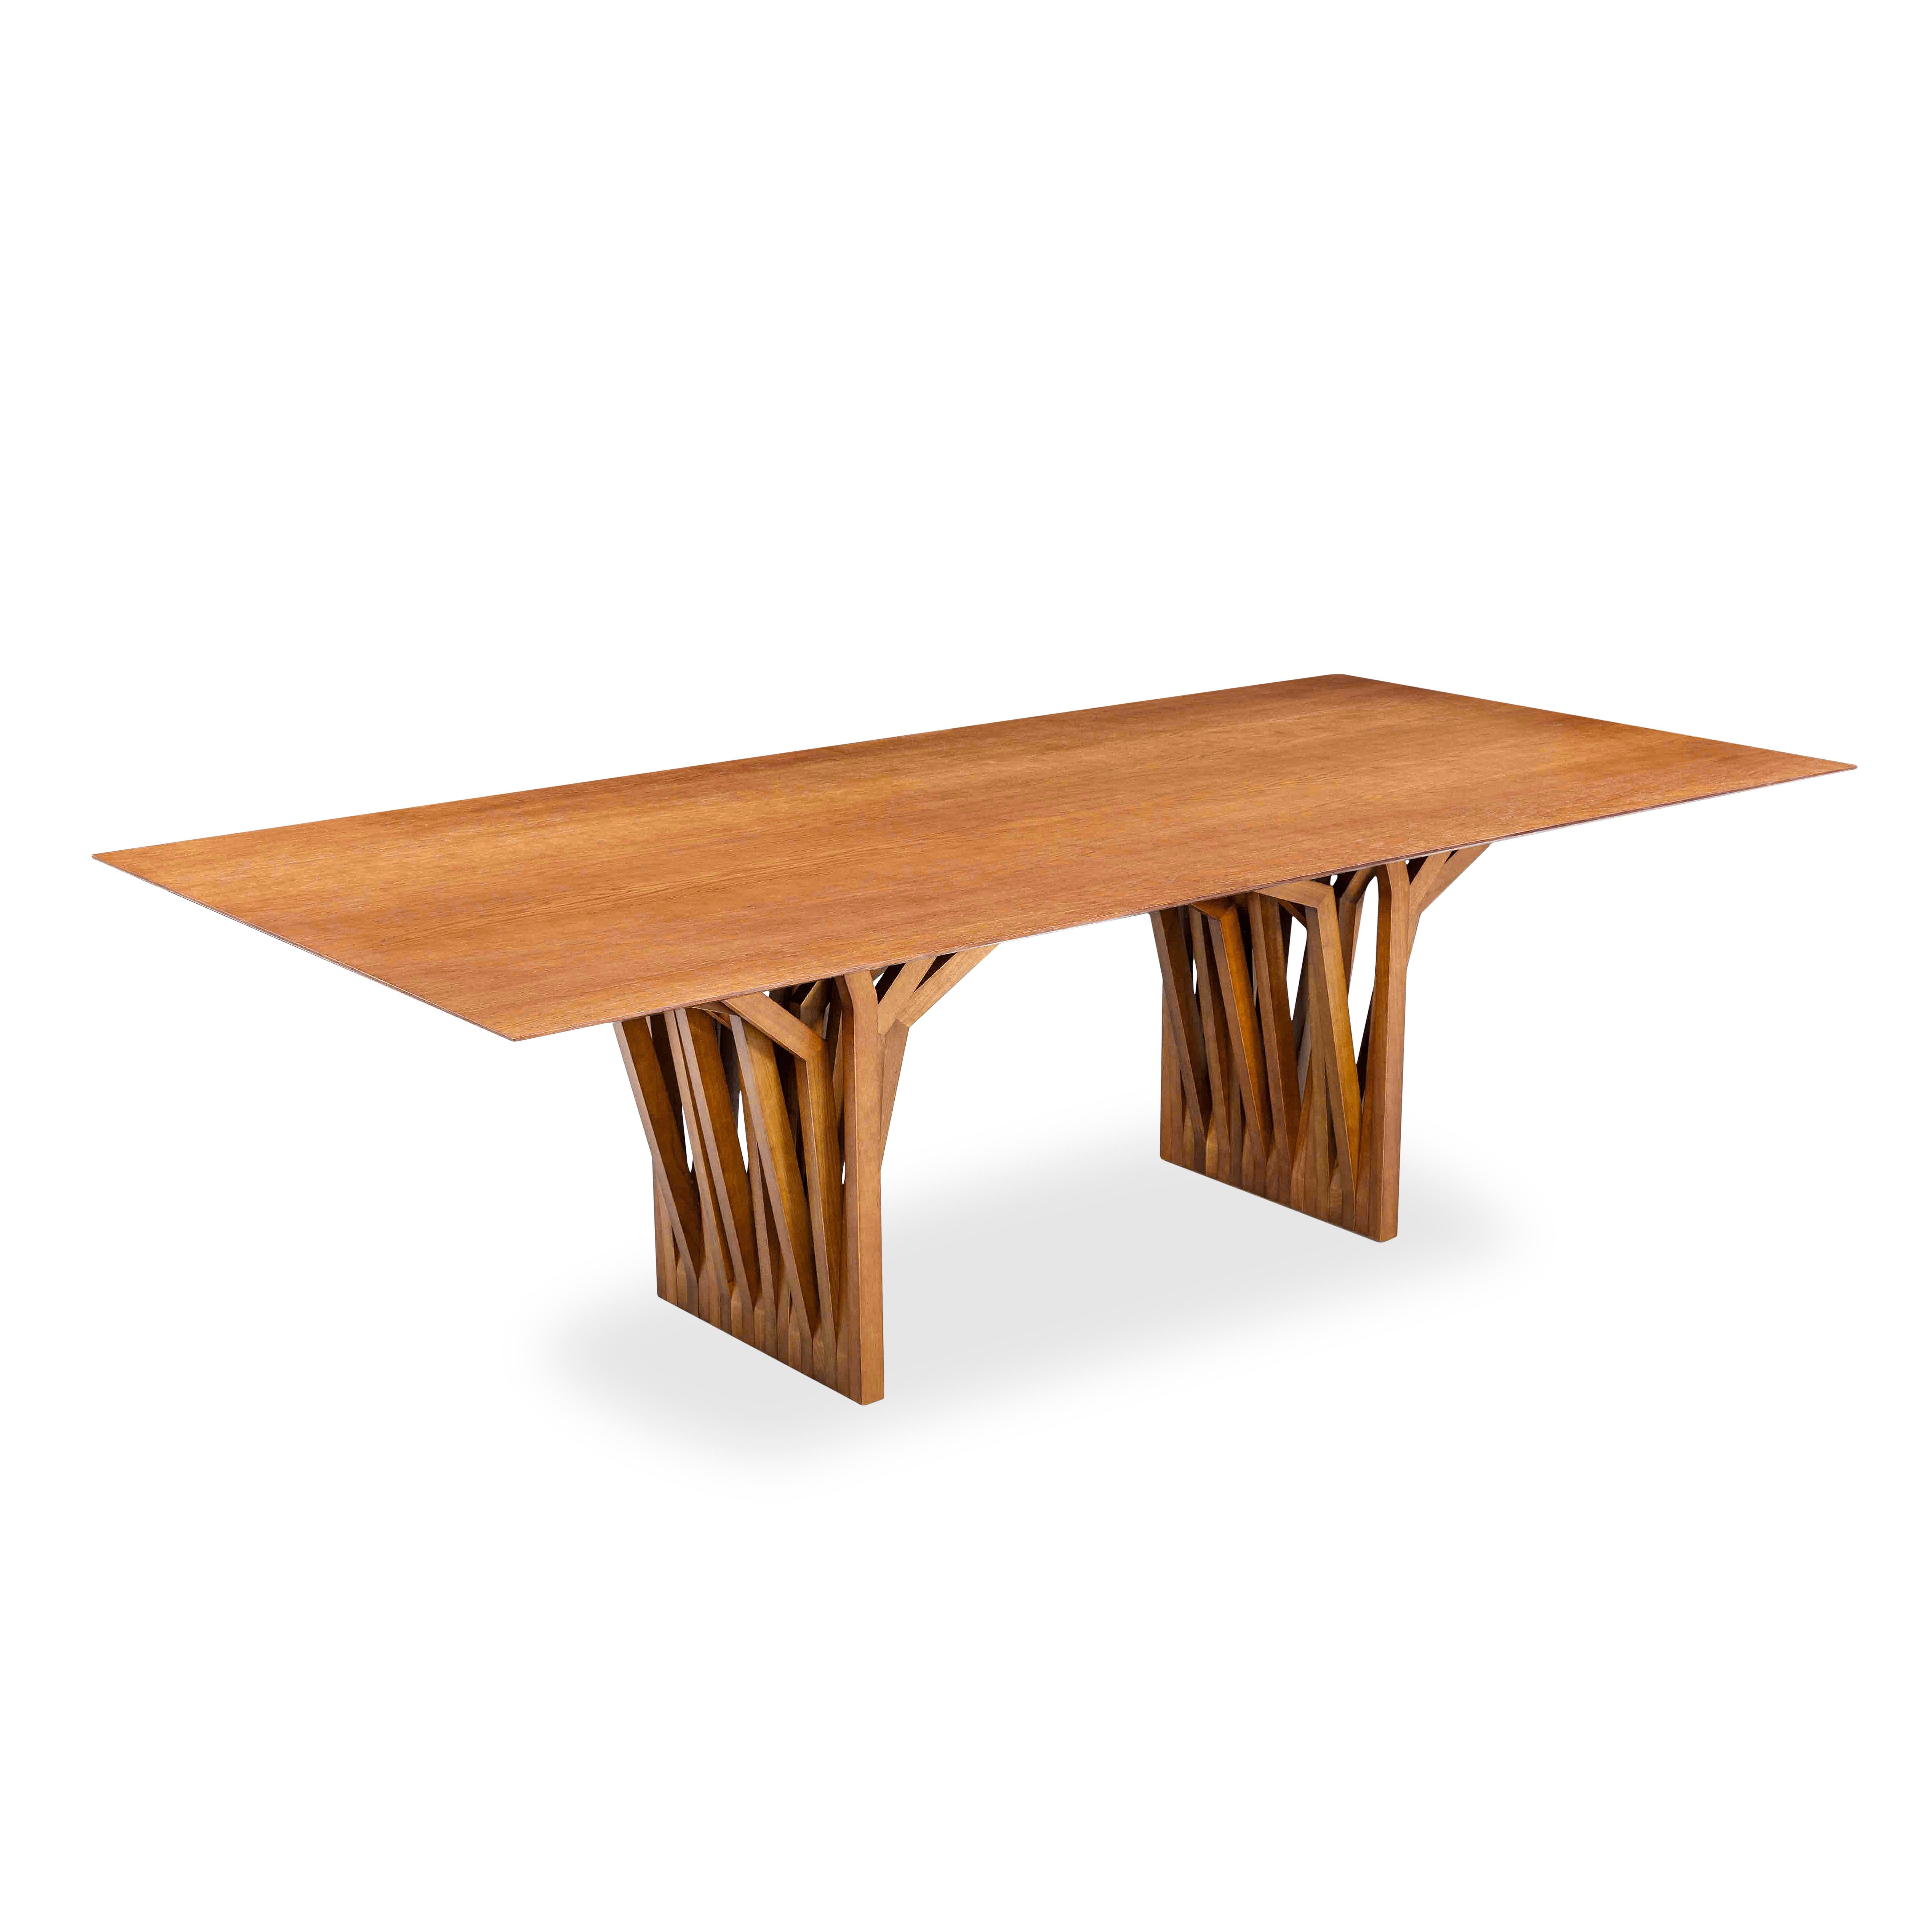 Brazilian Radi Dining Table with Almond Oak Wood Veneered Table Top 98'' For Sale